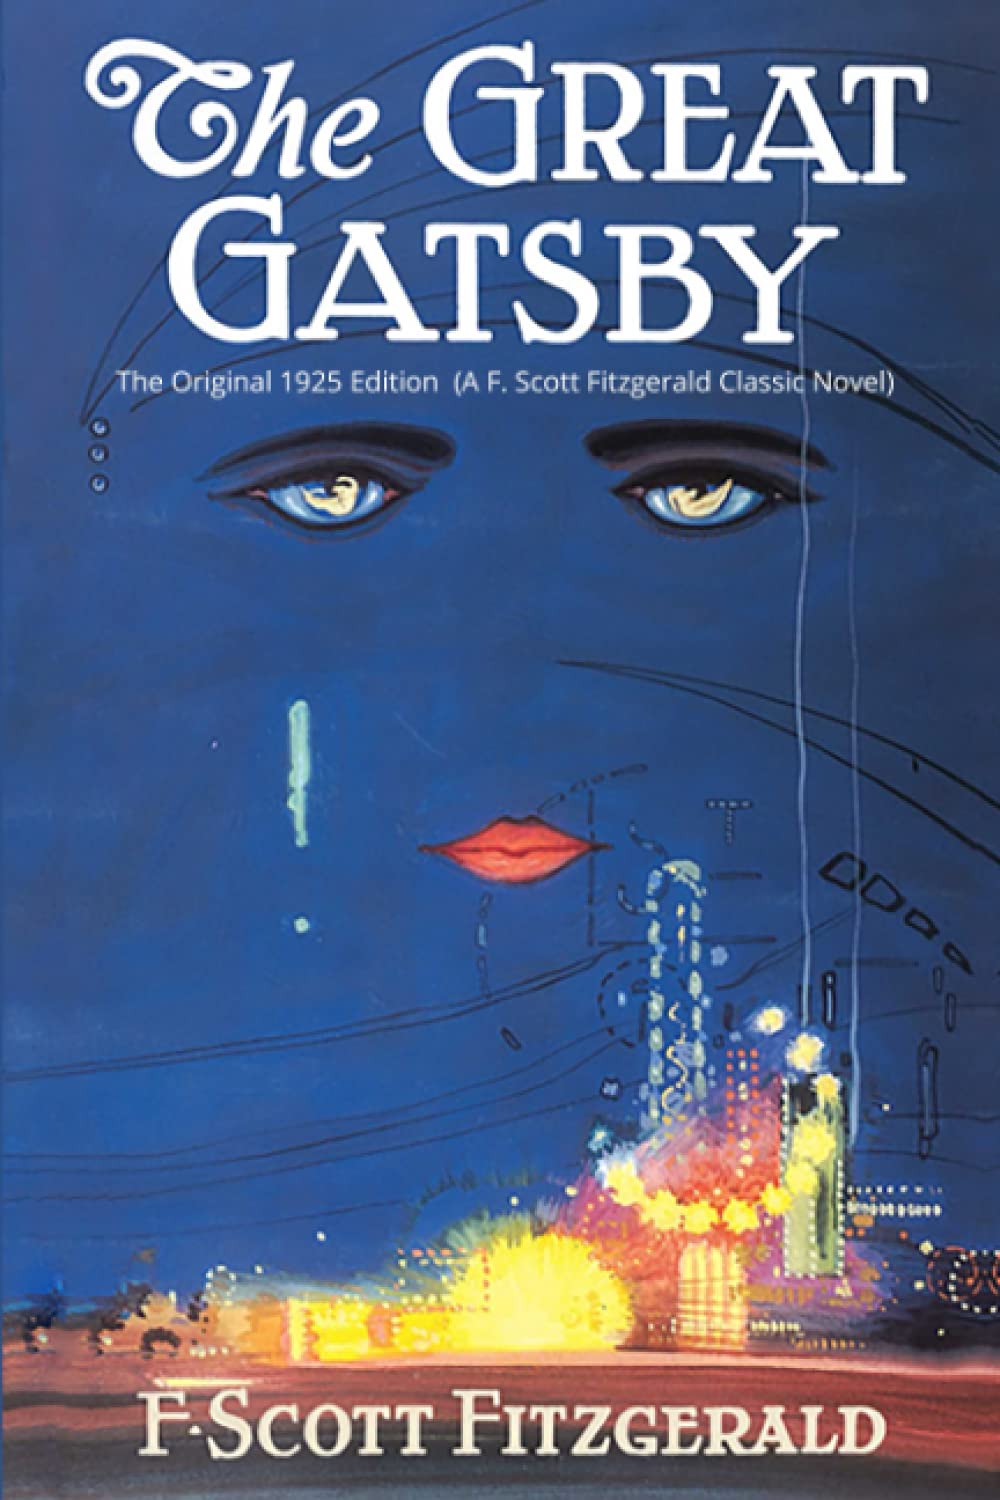 Gatsby vĩ đại (The Great Gatsby)